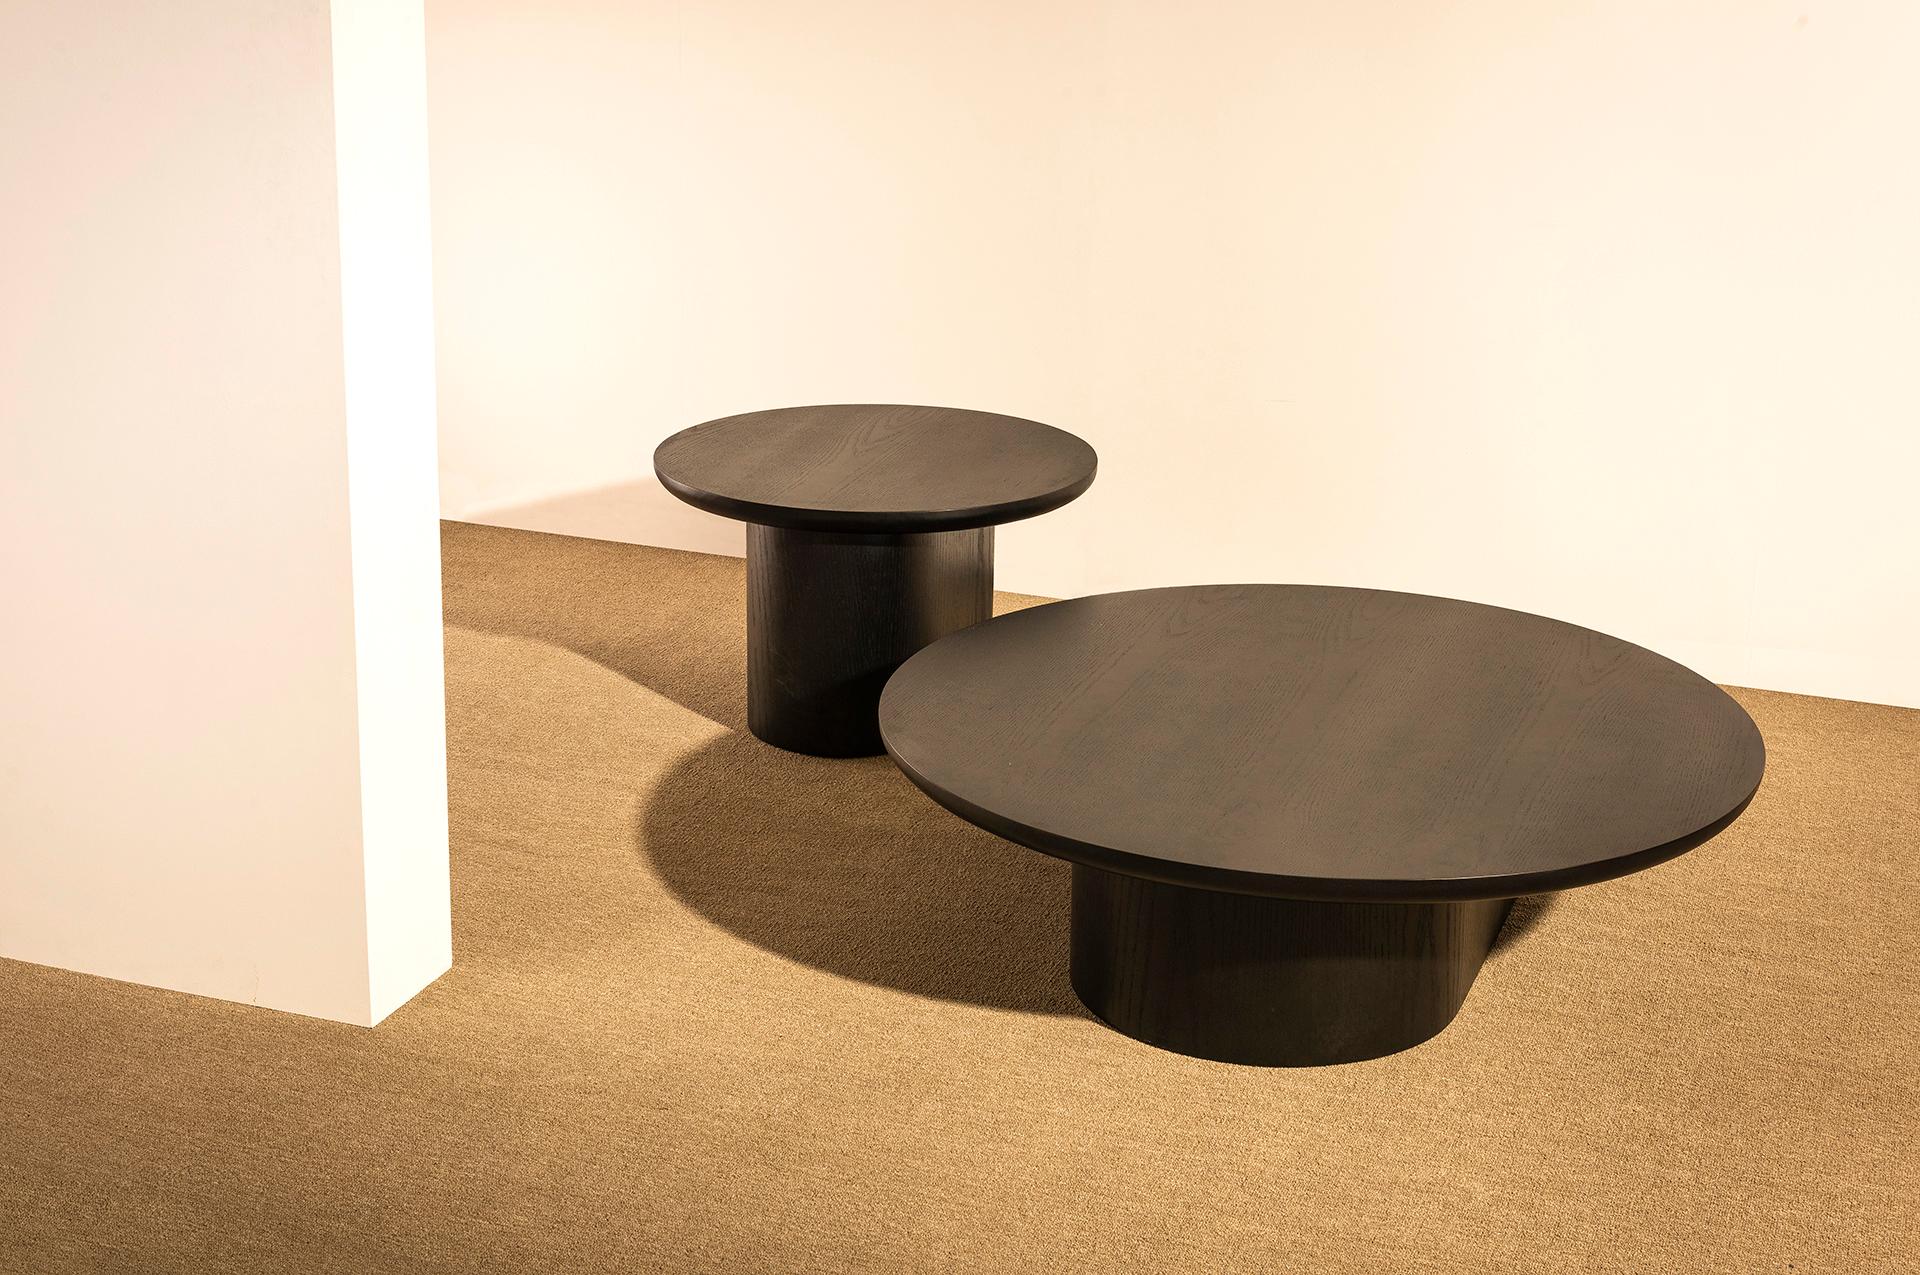 Brazilian Porto Set Center Table, by Rain, Contemporary Center Table, Laminated Oakwood